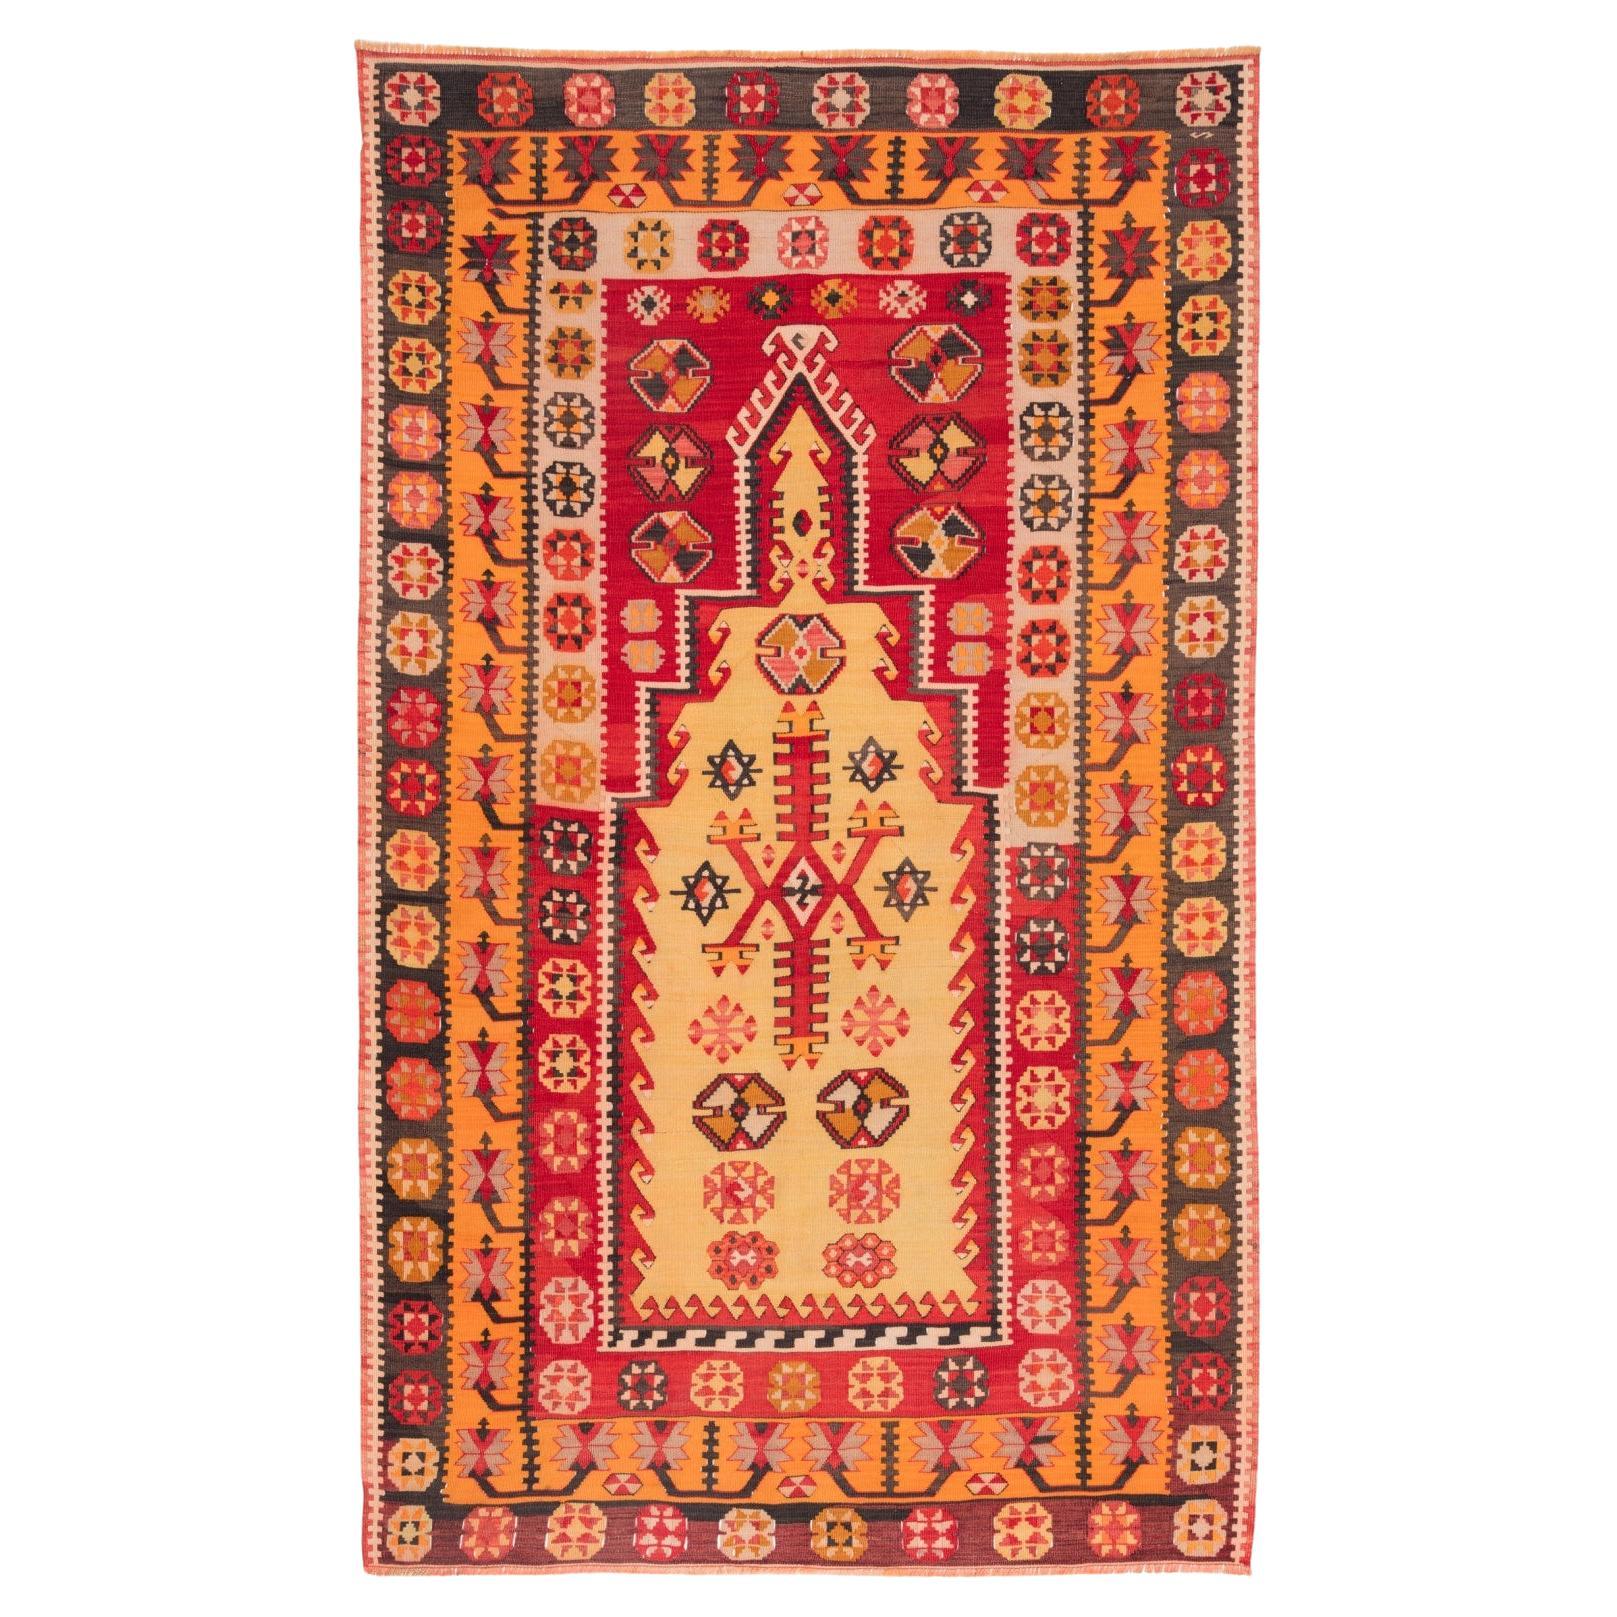 Antique Corum Chorum Mihrab Kilim Rug Wool Old Central Anatolian Turkish Carpet For Sale